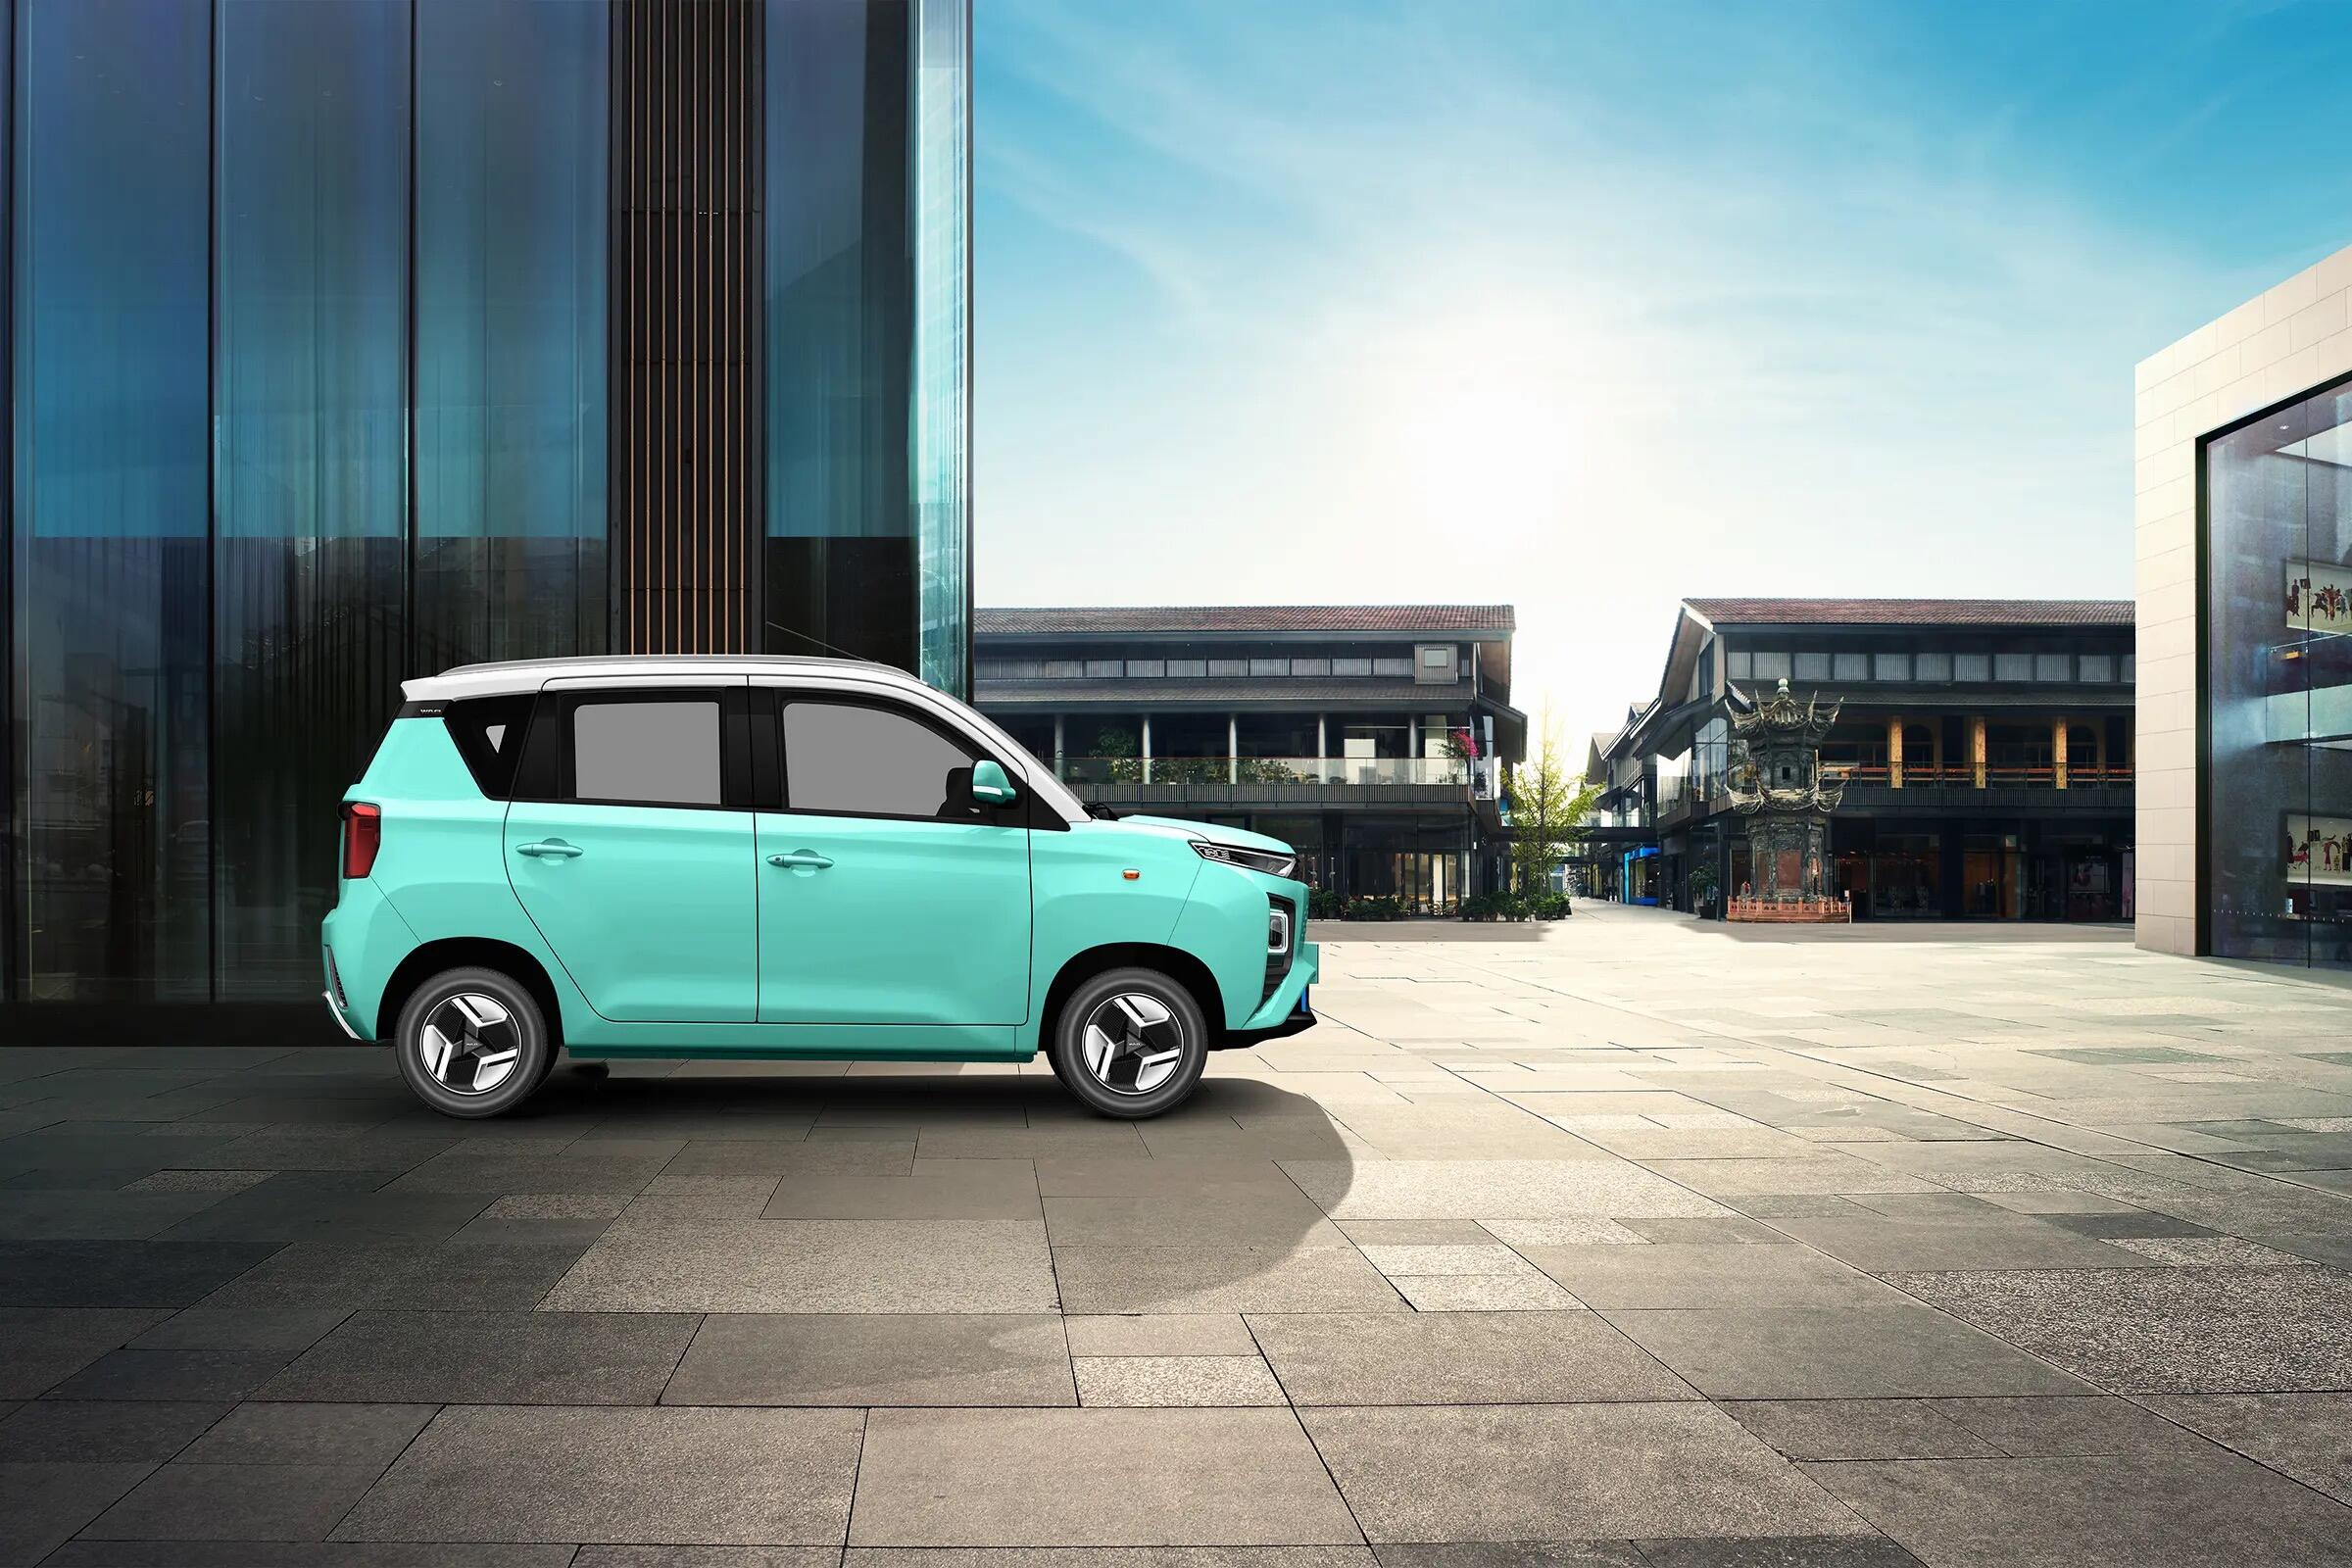 2023 Mini BAIC Jia Bao New Energy Vehicle Eco-friendly transportation solution electric MINI used car for adult supplier